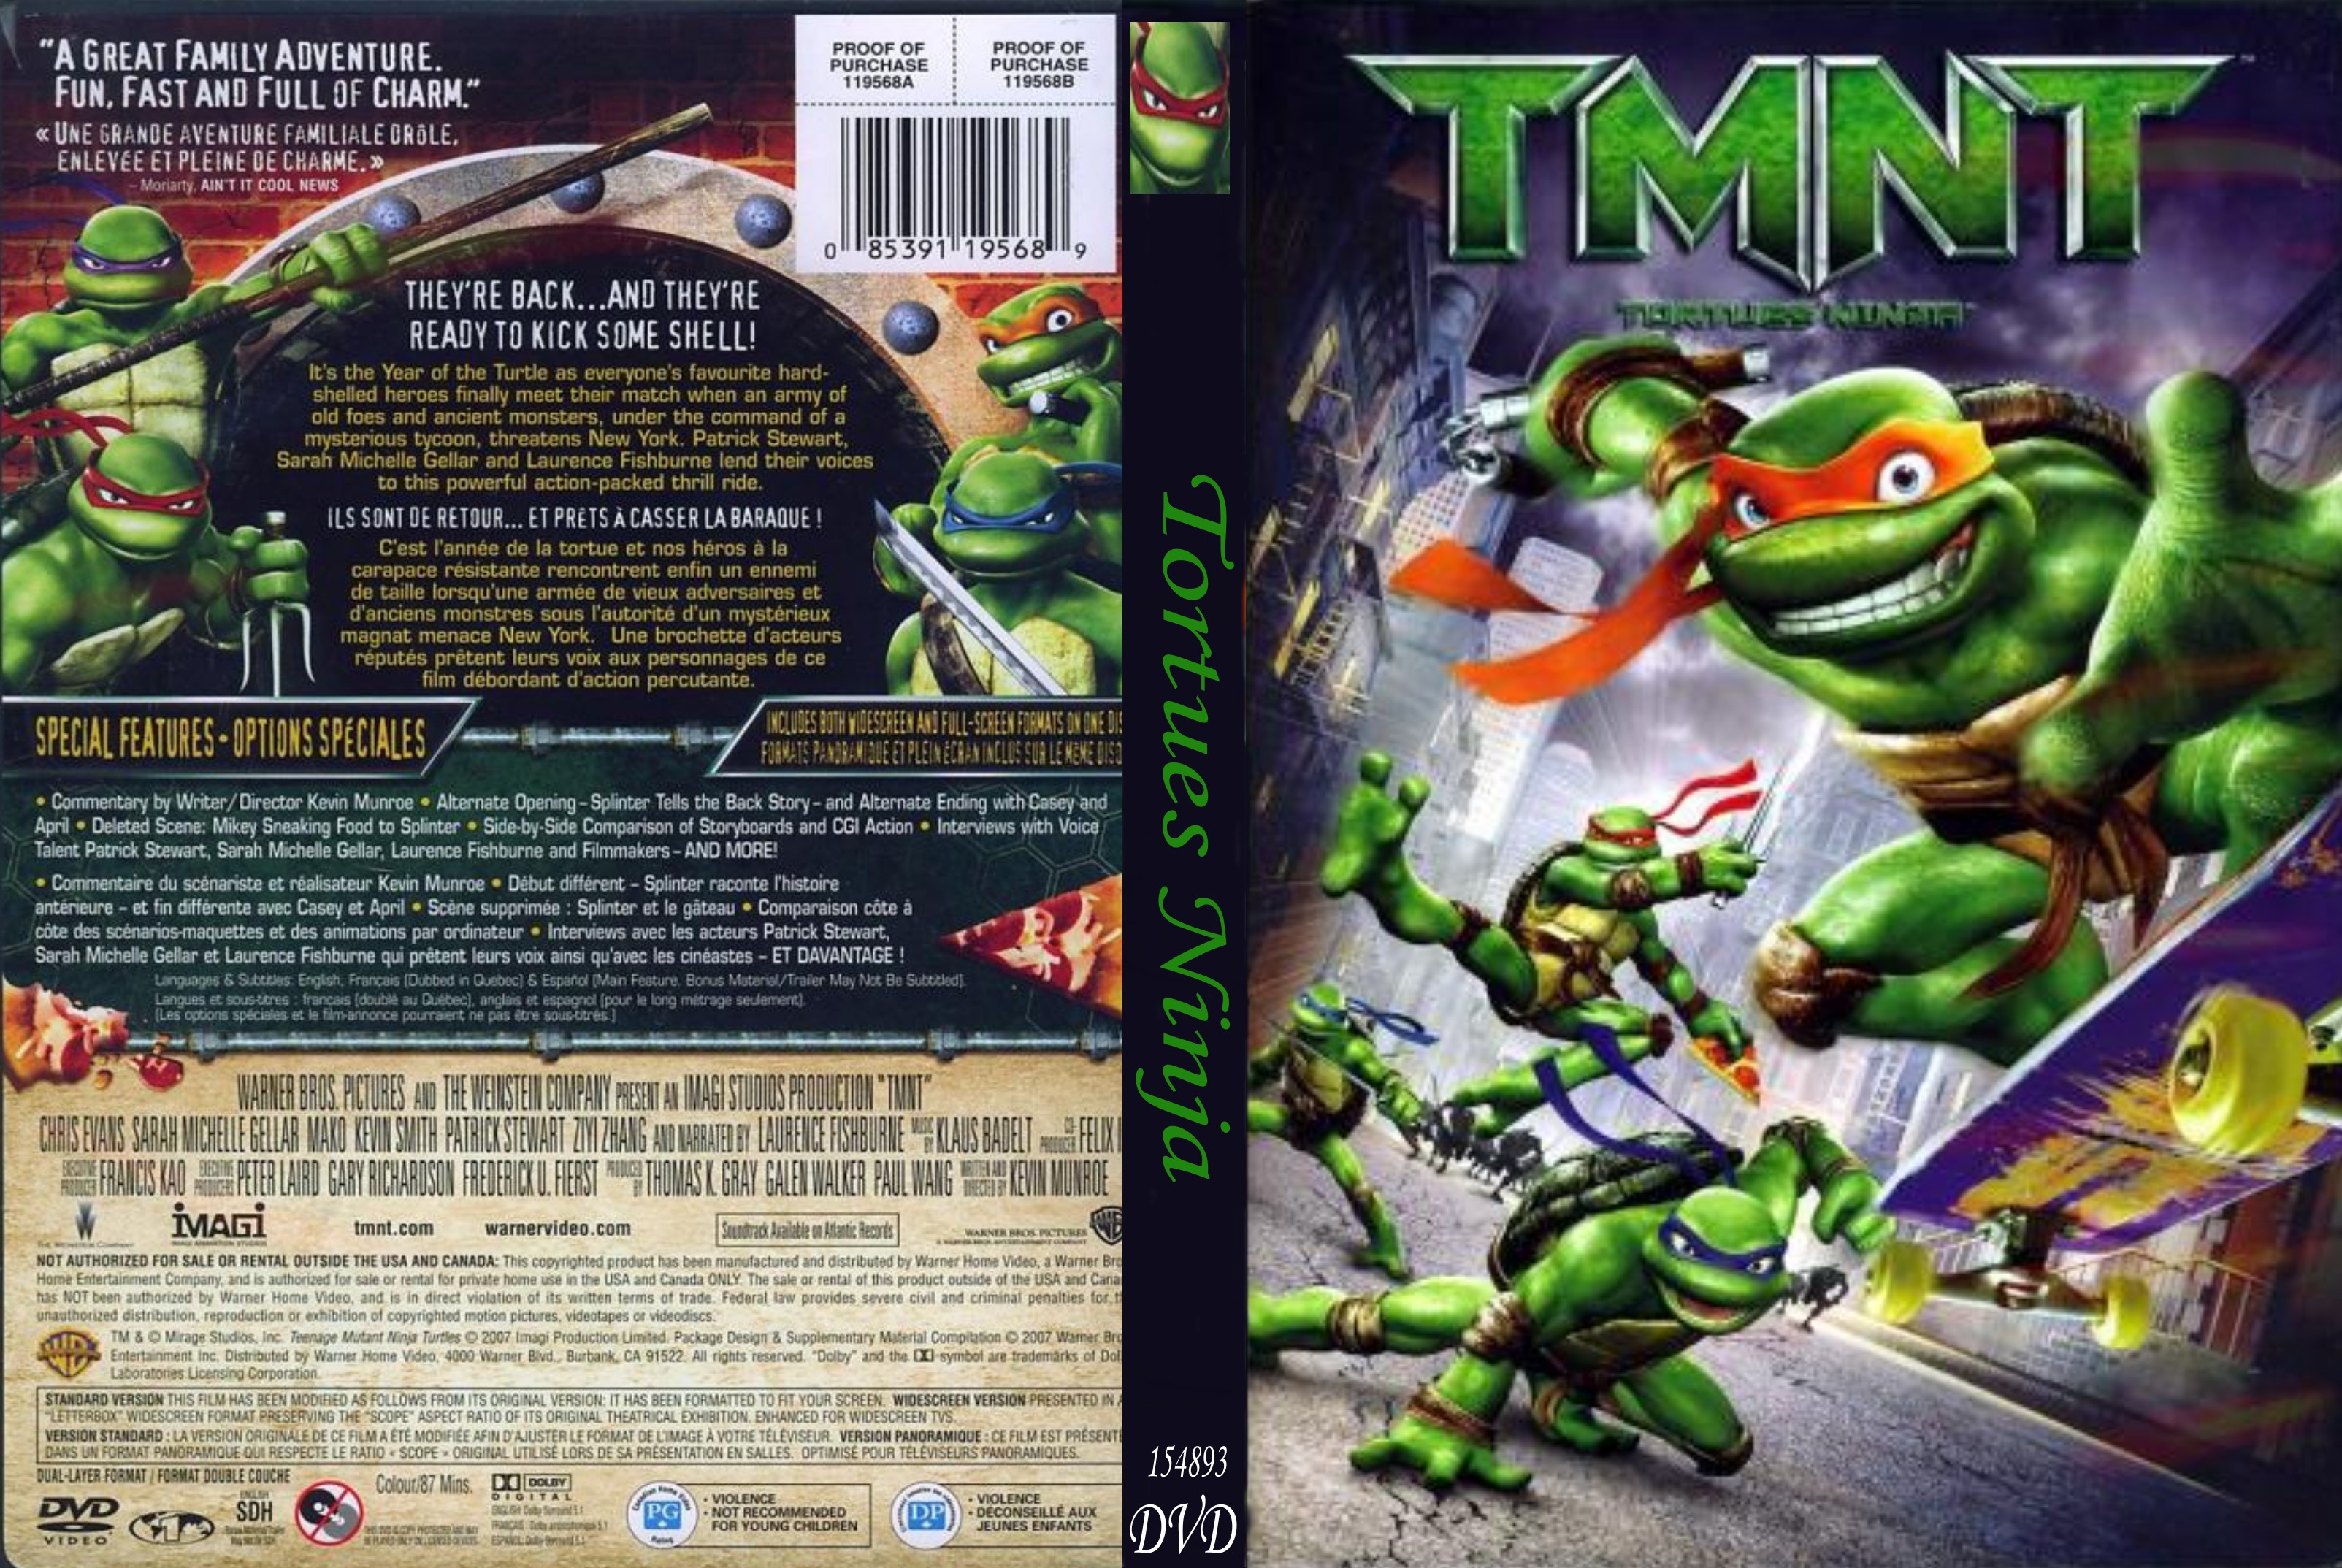 Jaquette DVD TMNT les tortues ninja Zone 1